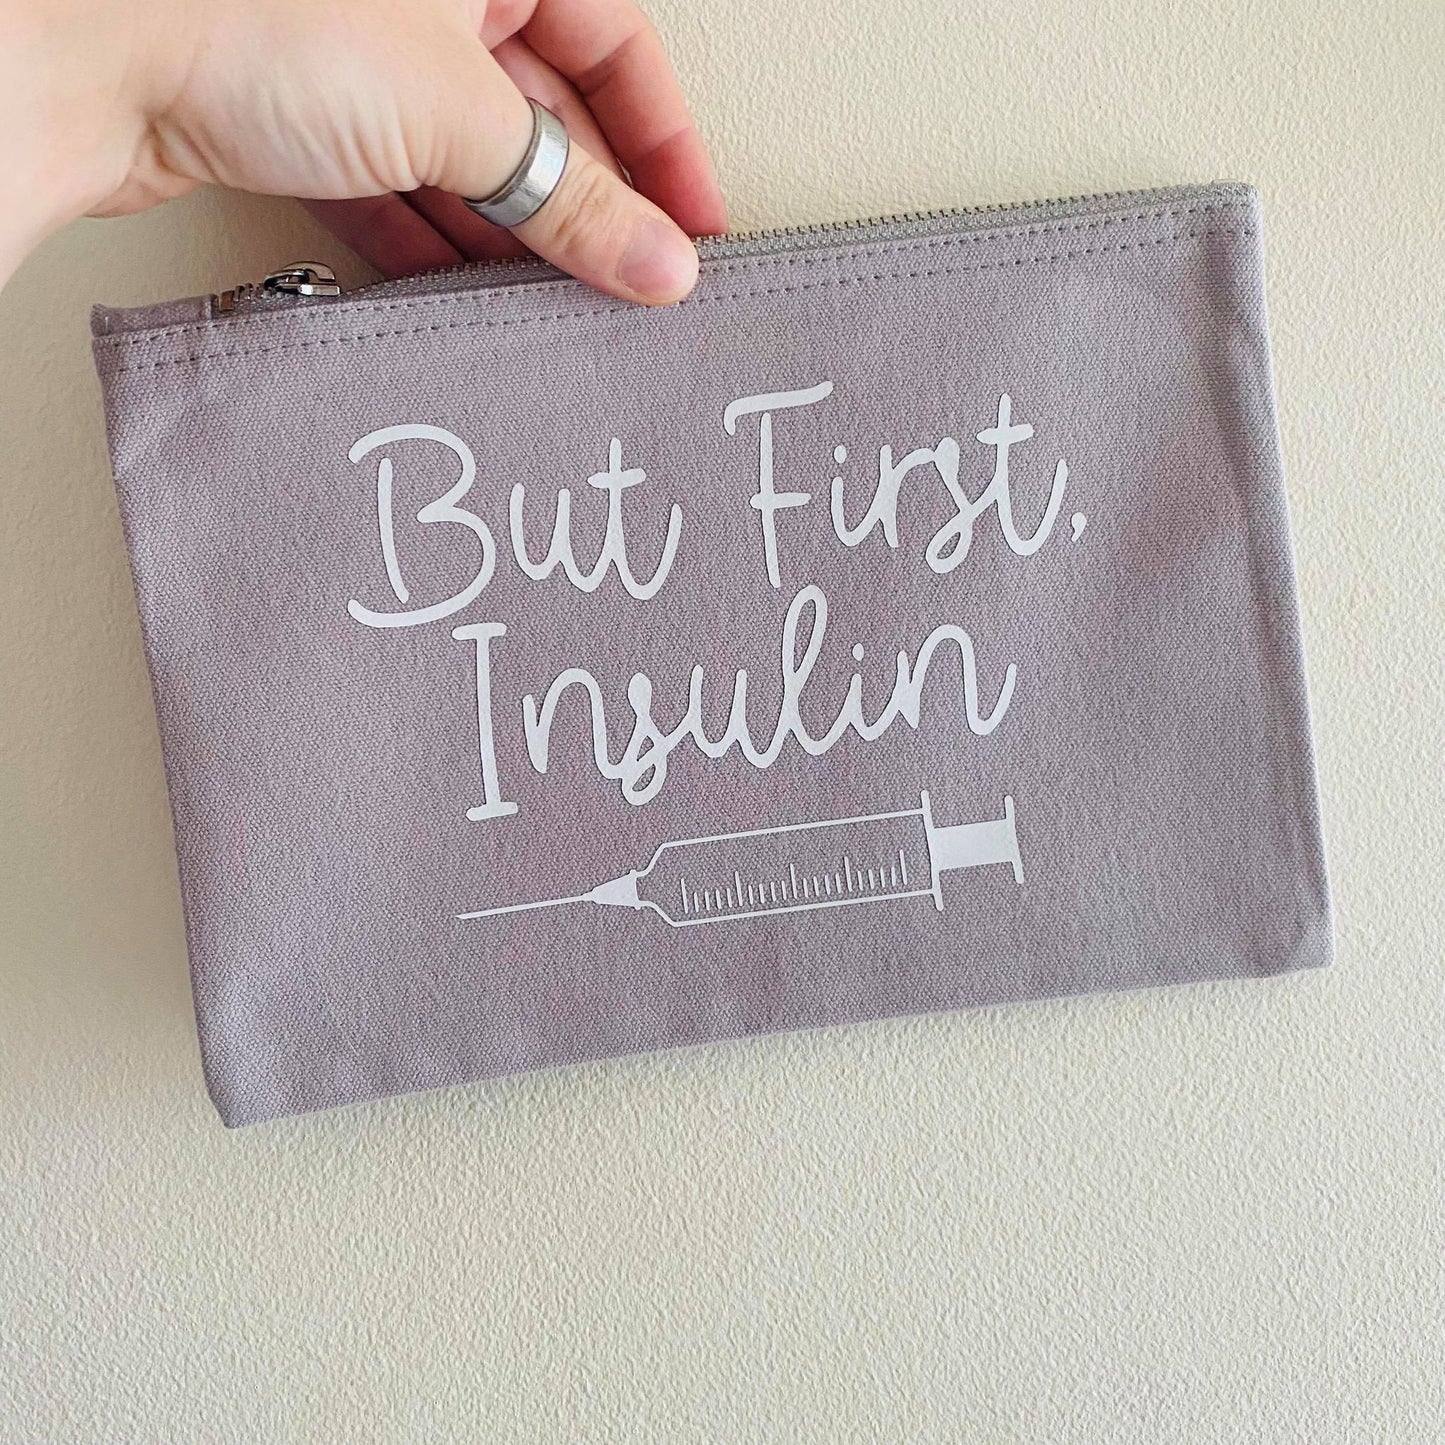 But First, Insulin - Kit Bag